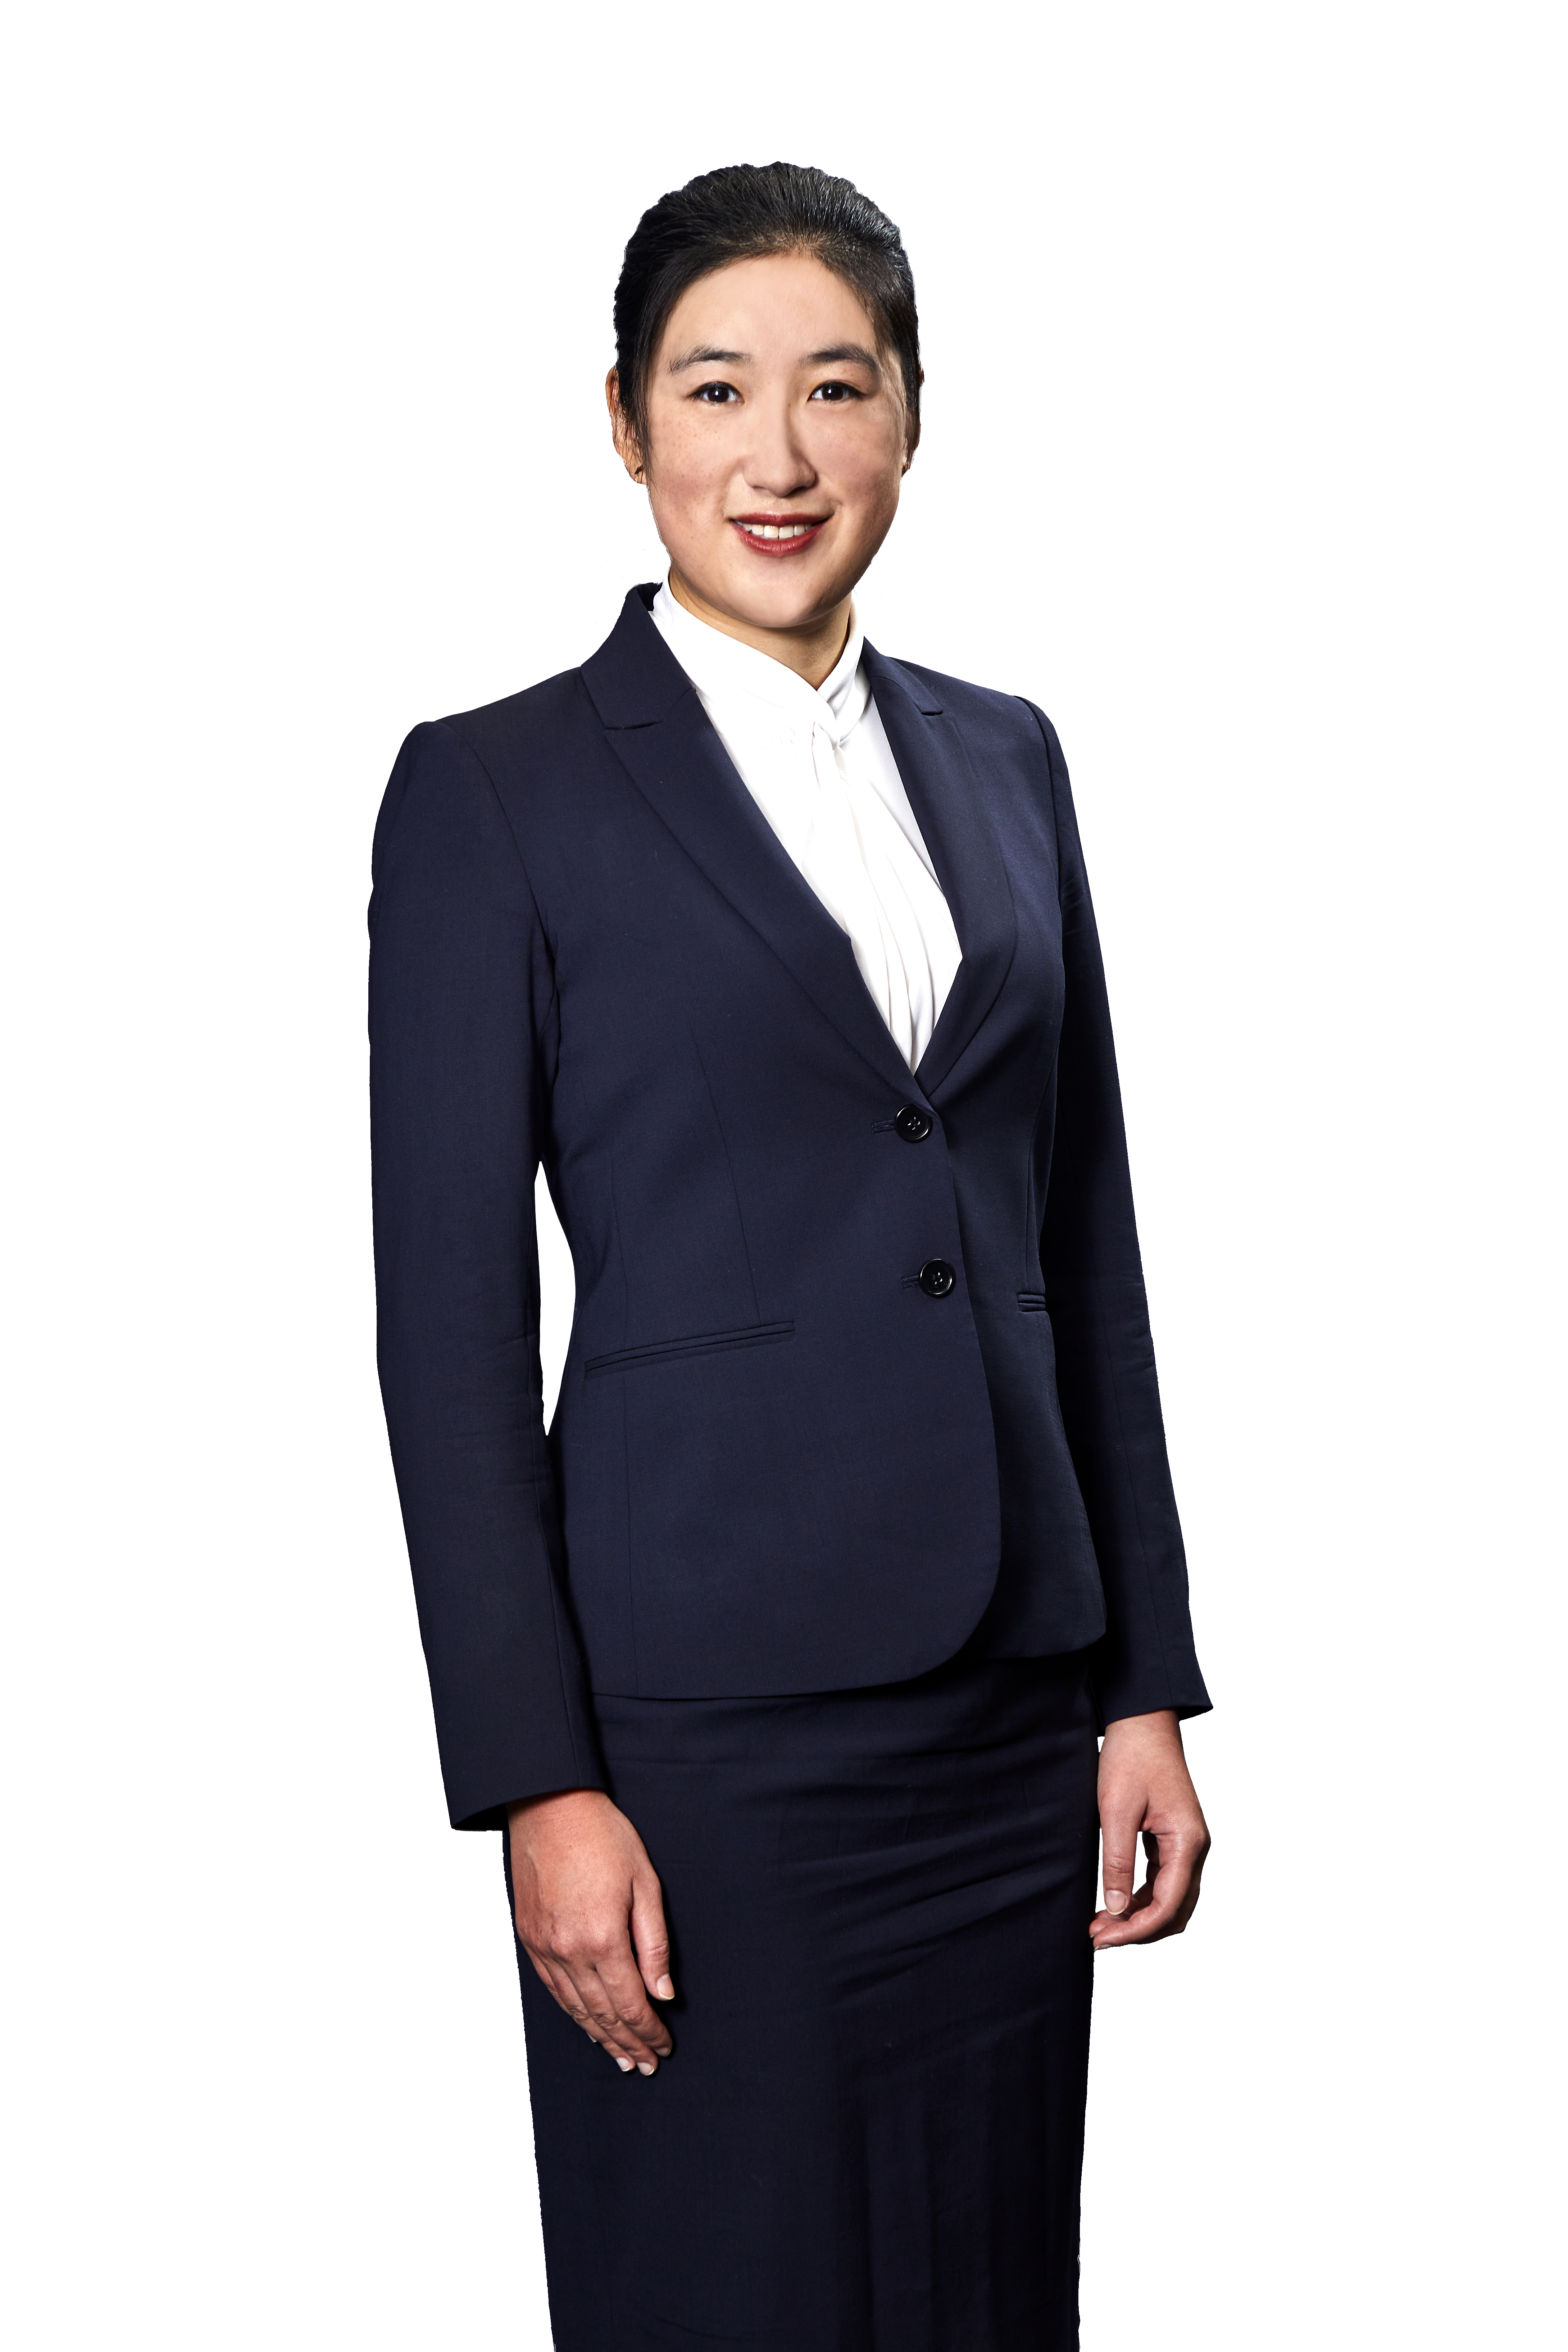 Lucia Wa Yang, an attorney